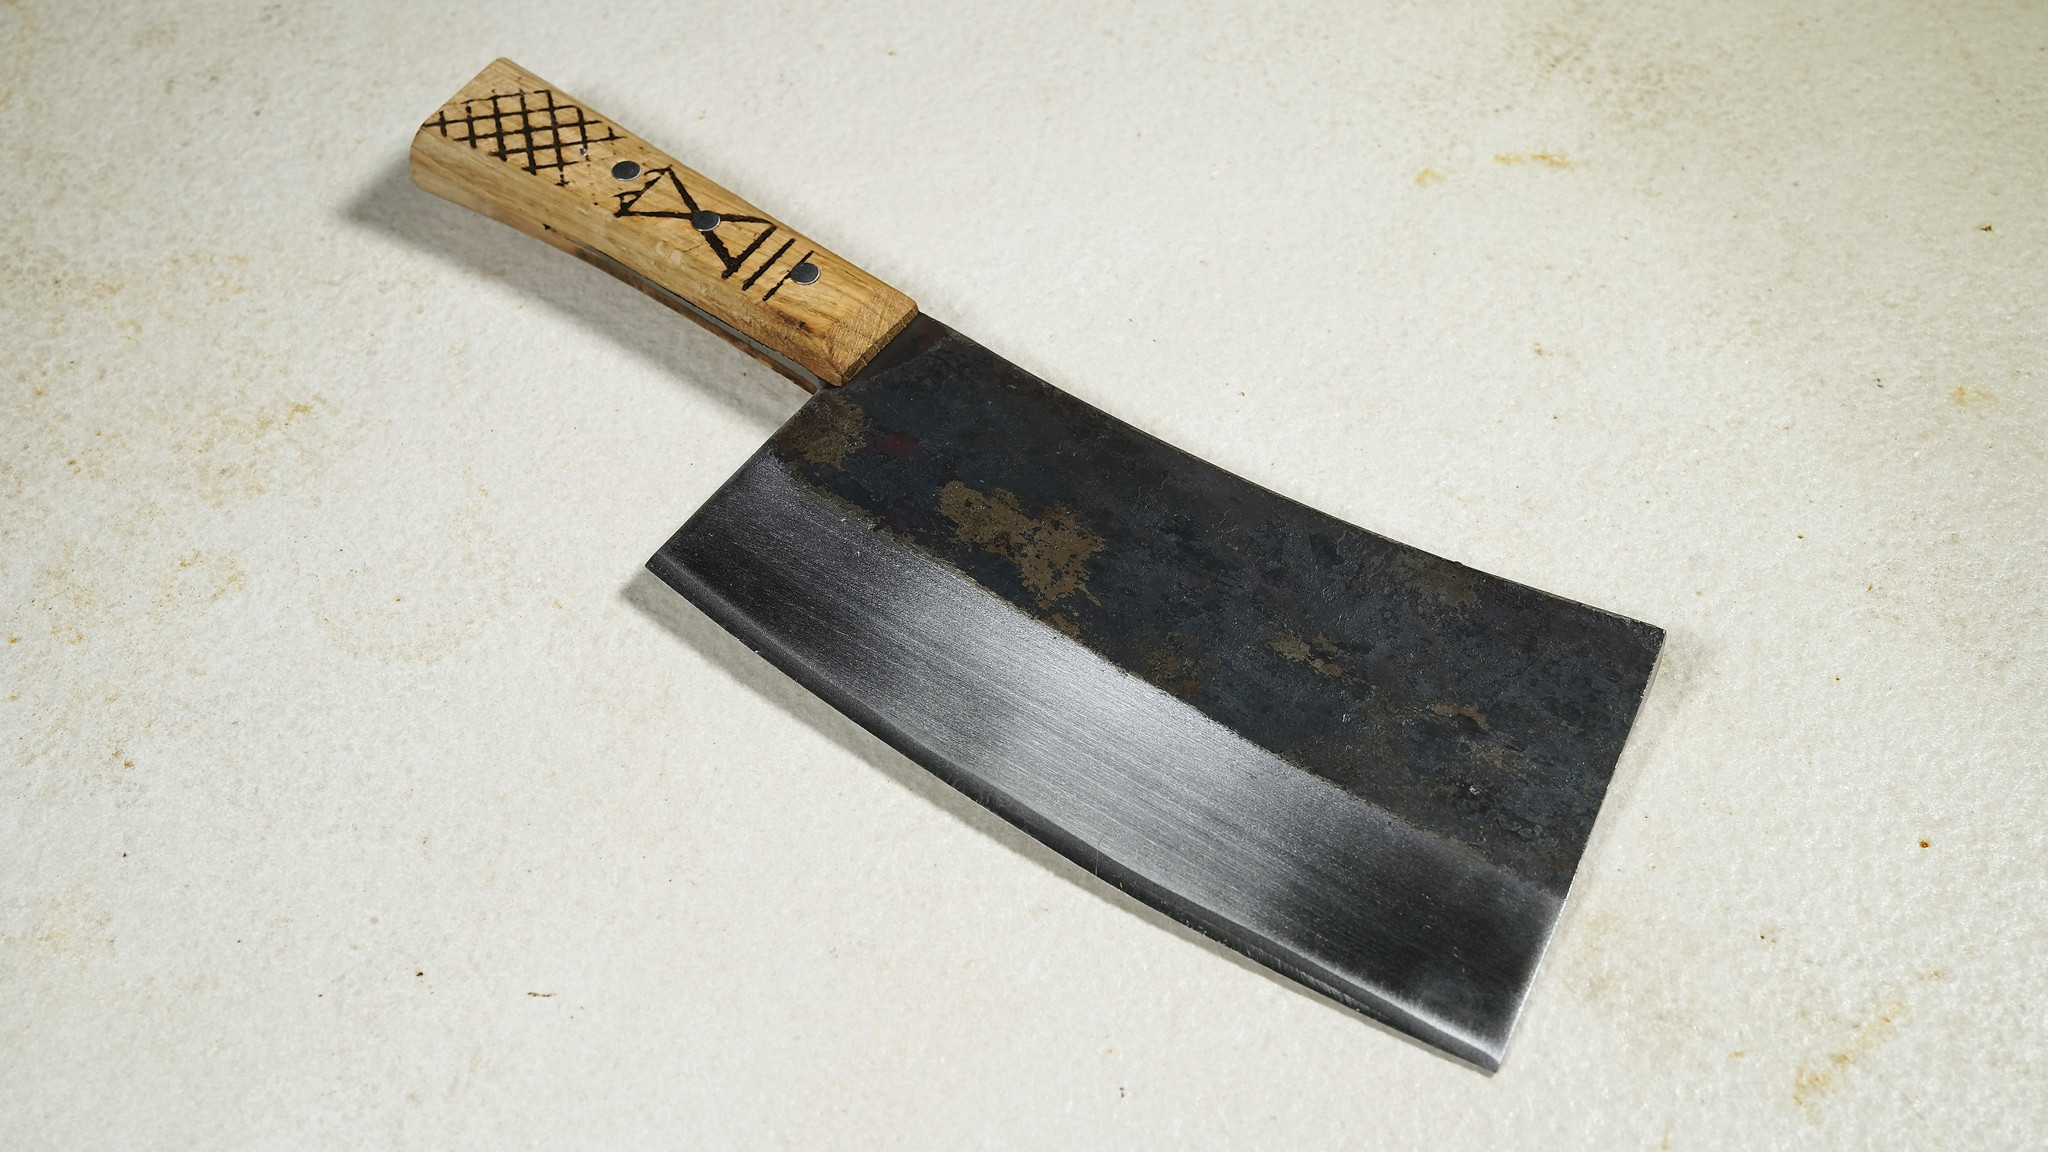 Kegani Meat Cleaver Knife - Heavy Duty Hand Forged Butcher Knife – Nine One  Network